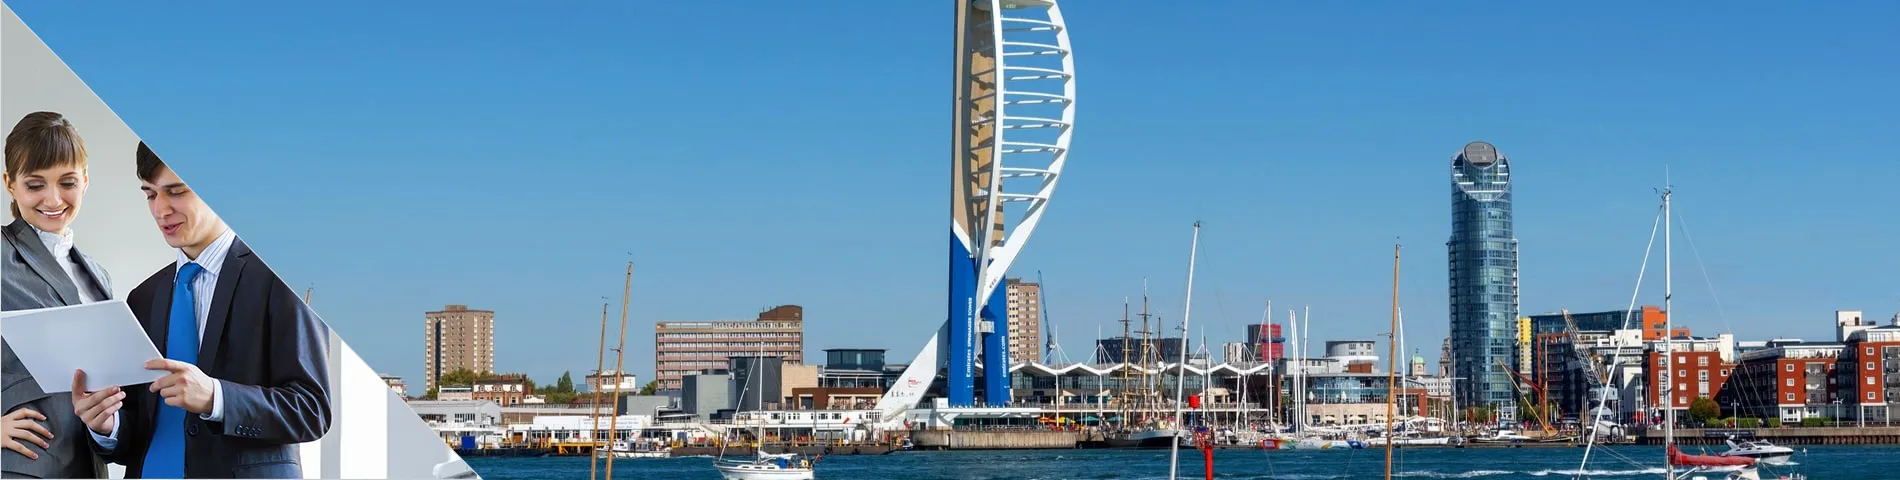 Portsmouth - 